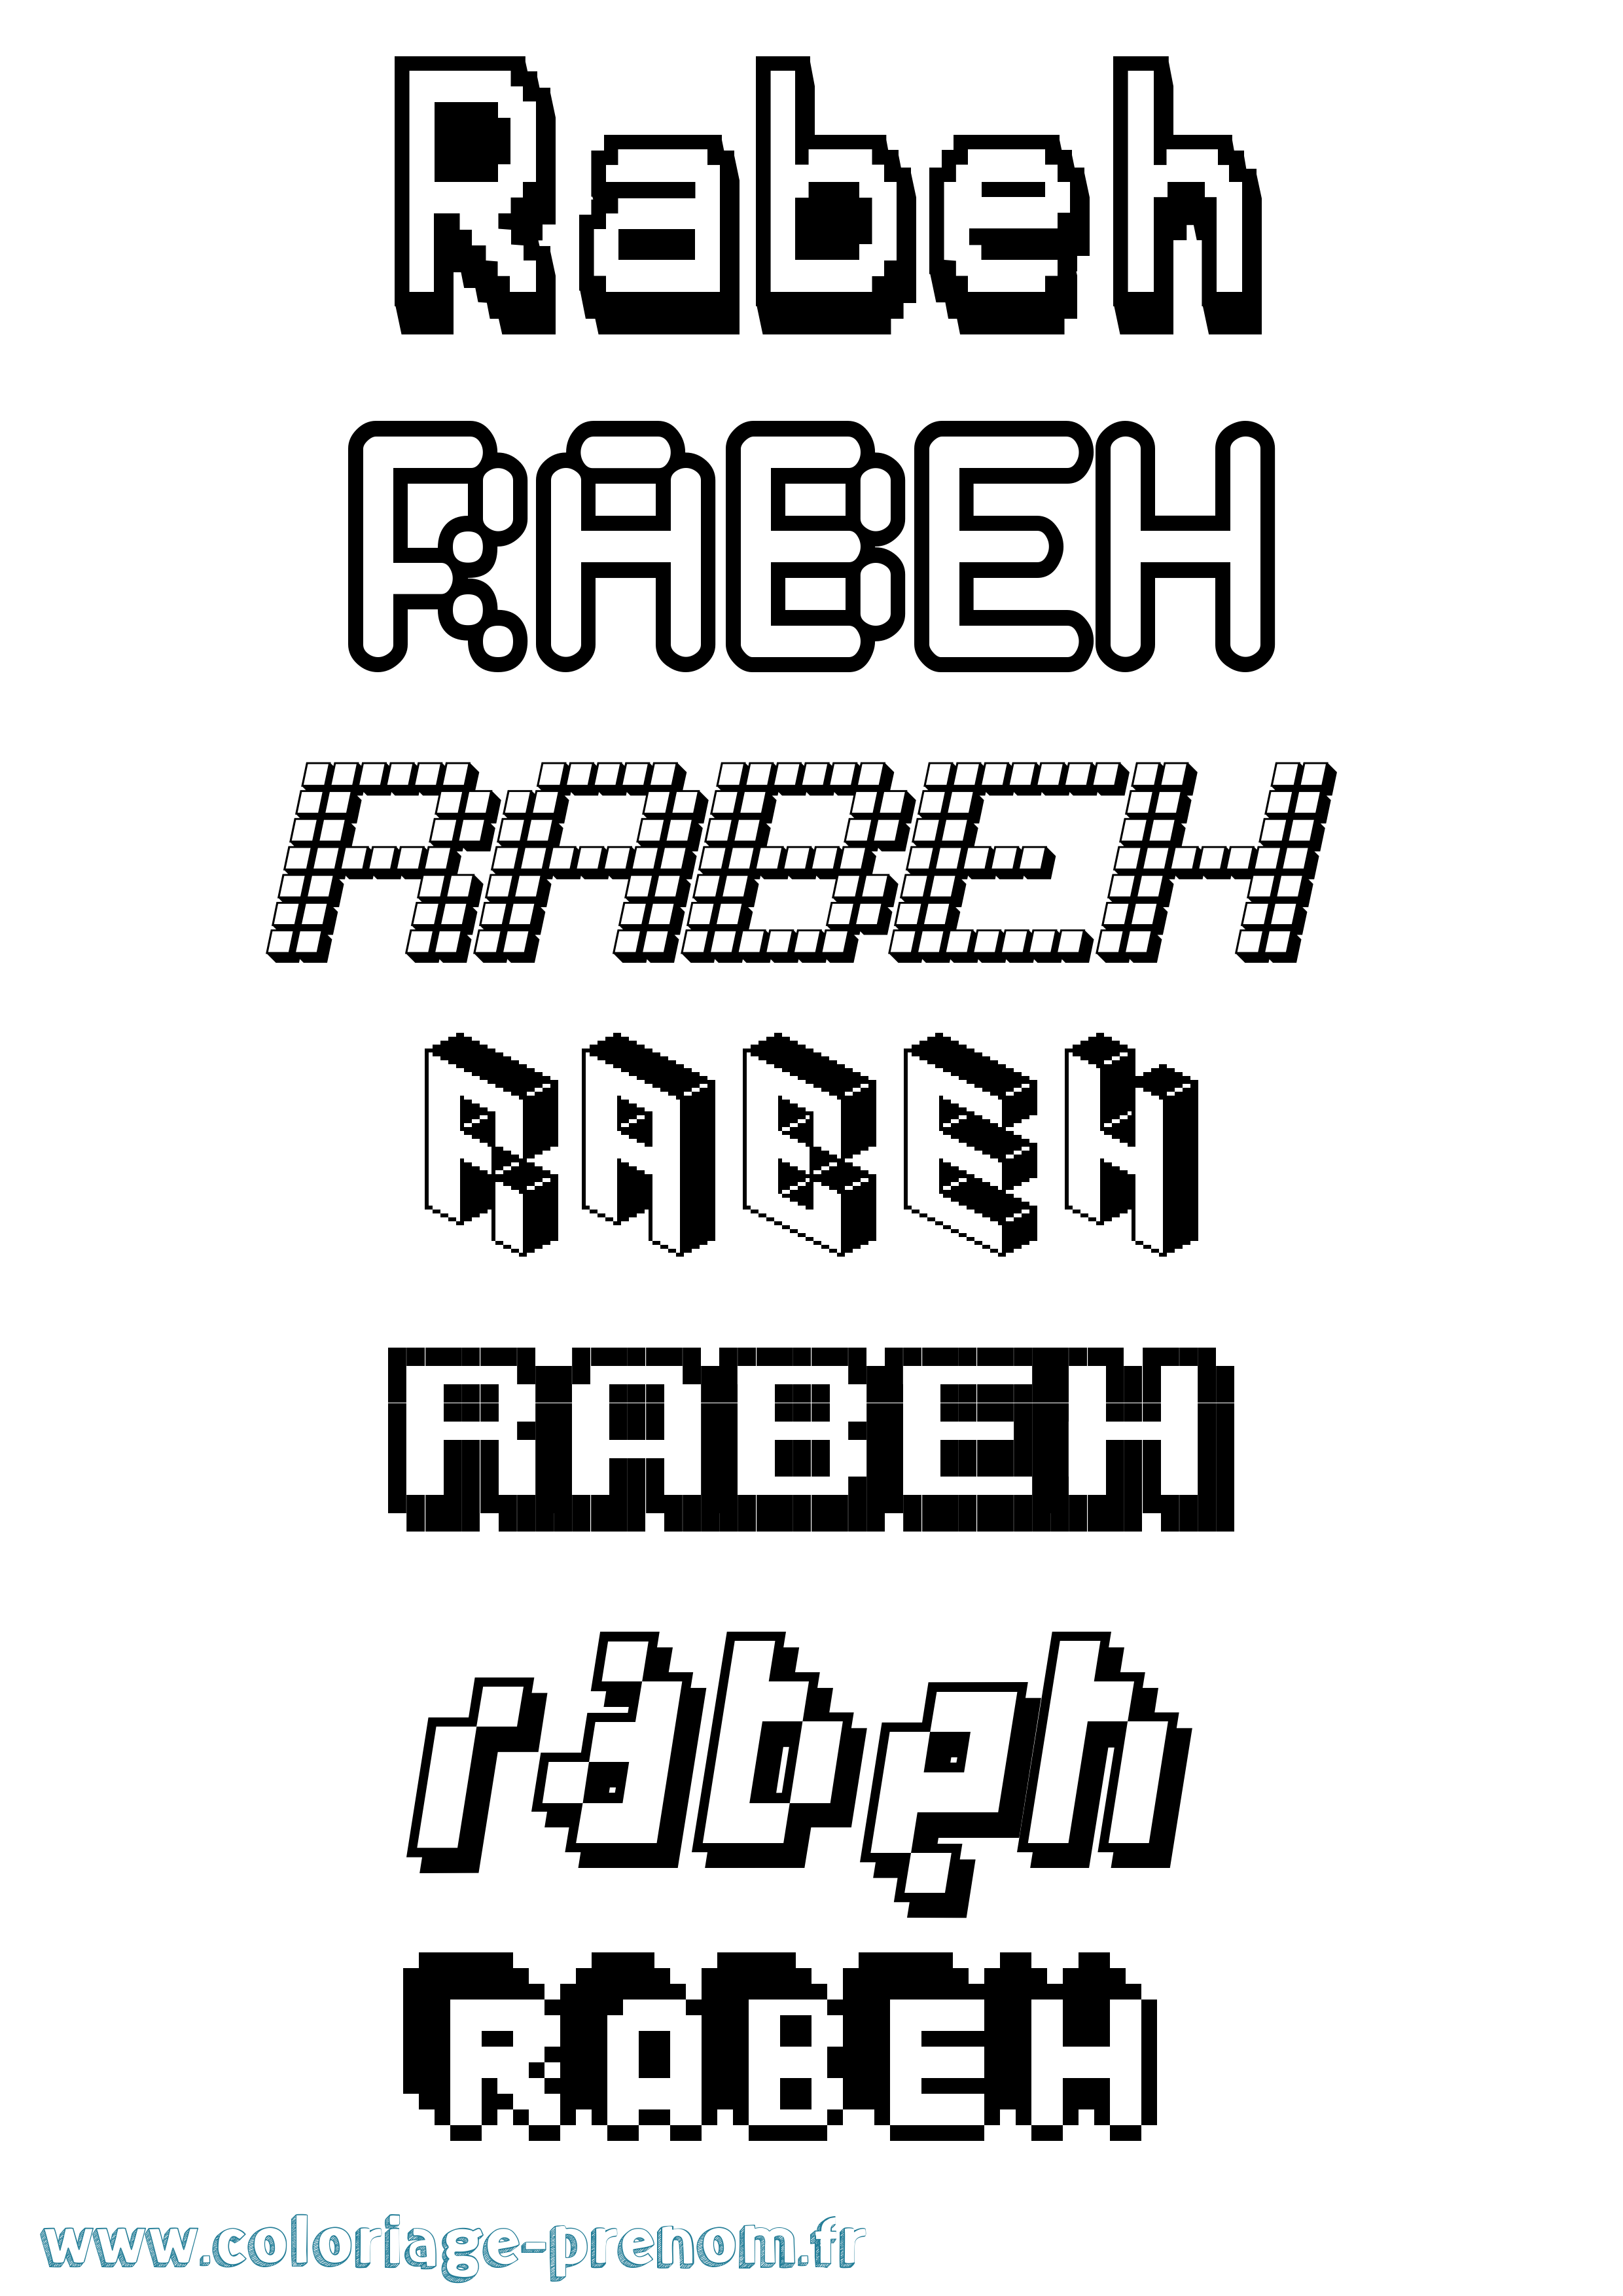 Coloriage prénom Rabeh Pixel